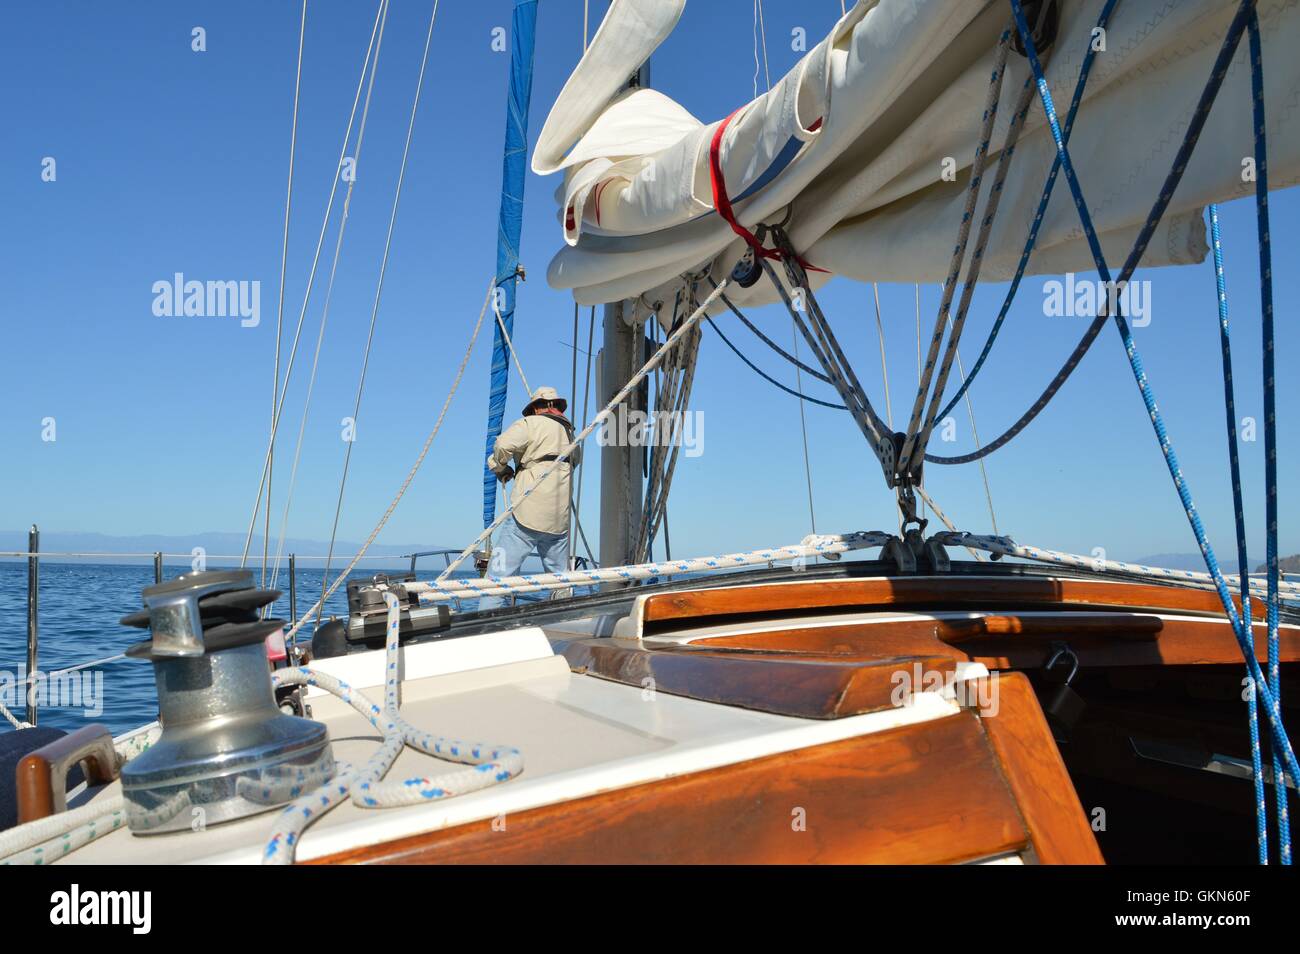 Man raising the sail Stock Photo